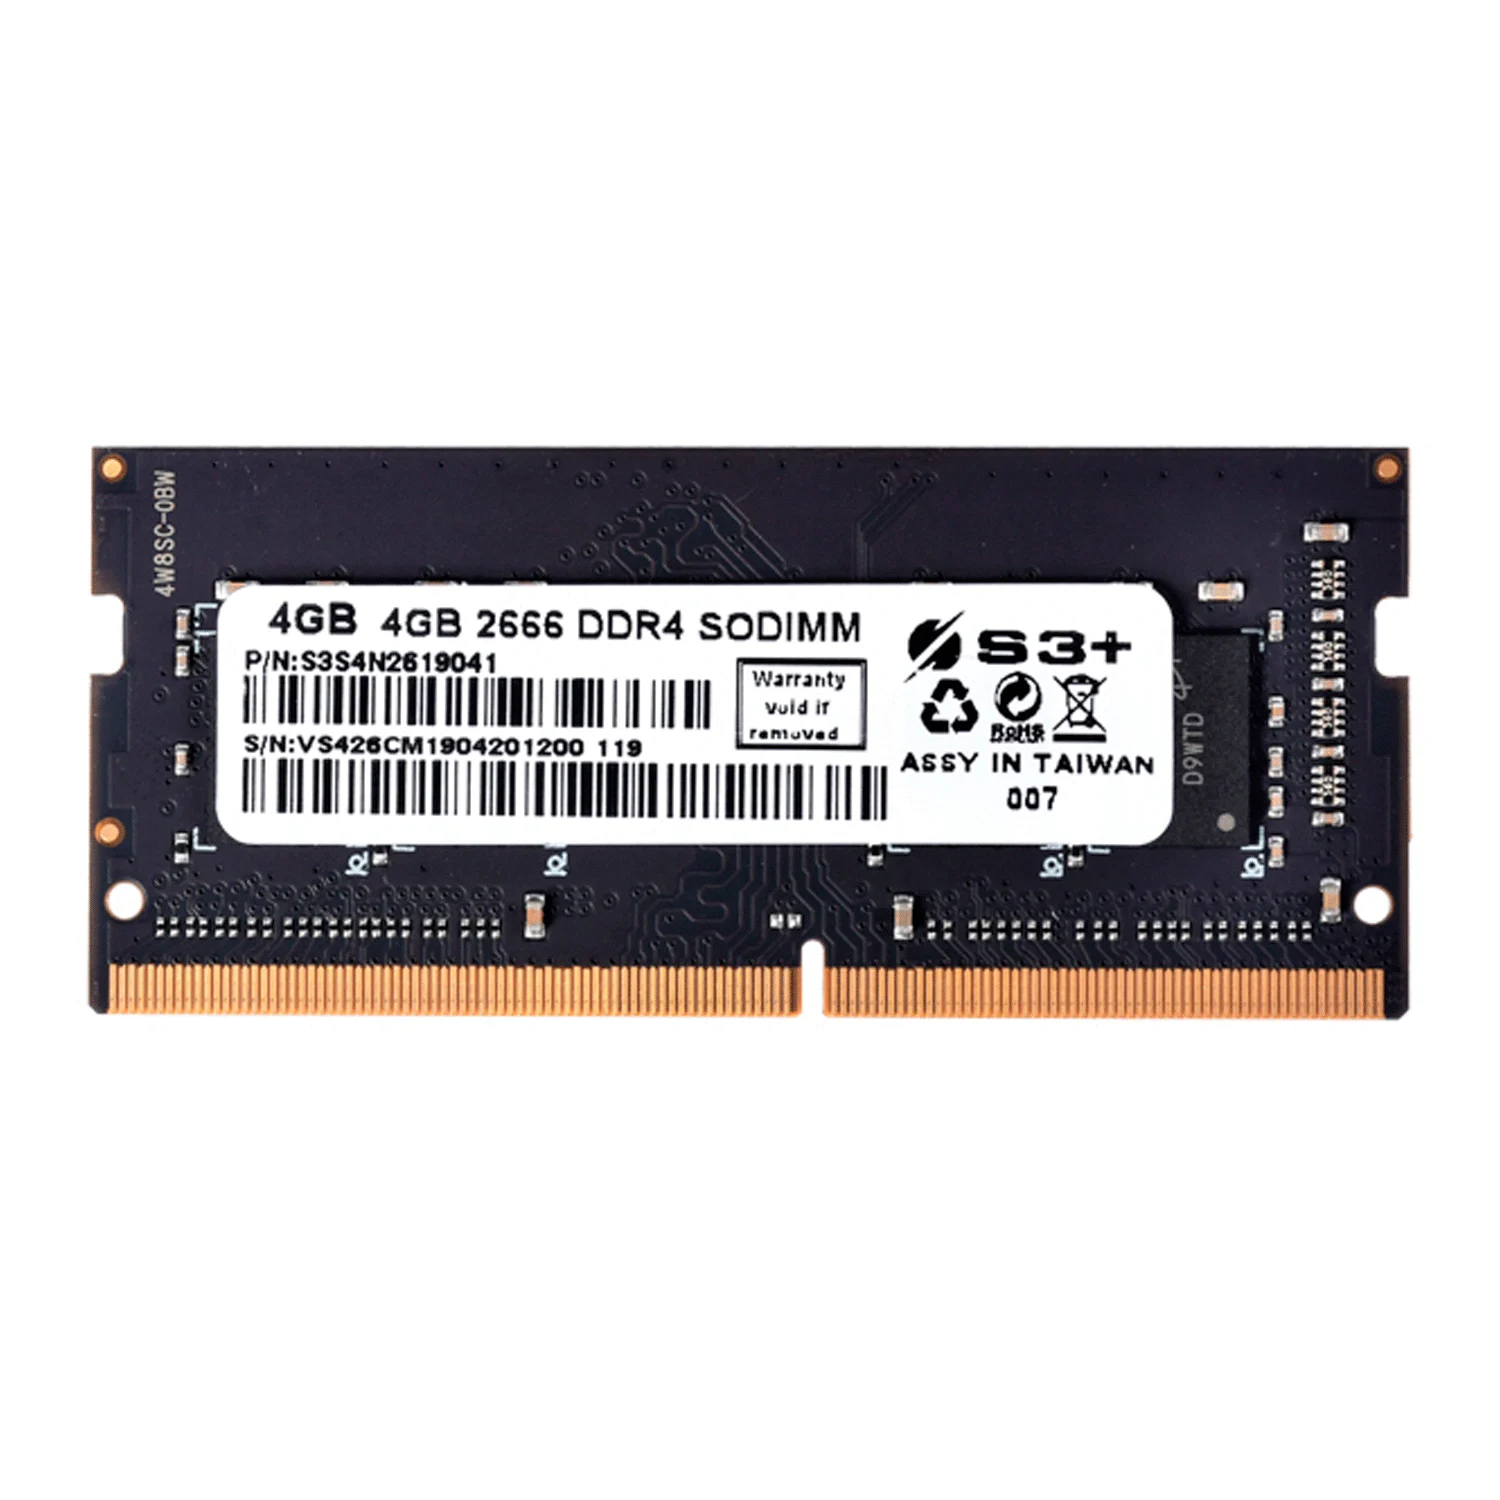 Memória para Notebook  S3+ S3S4N2619041 DDR4 4GB 2666 - Preto